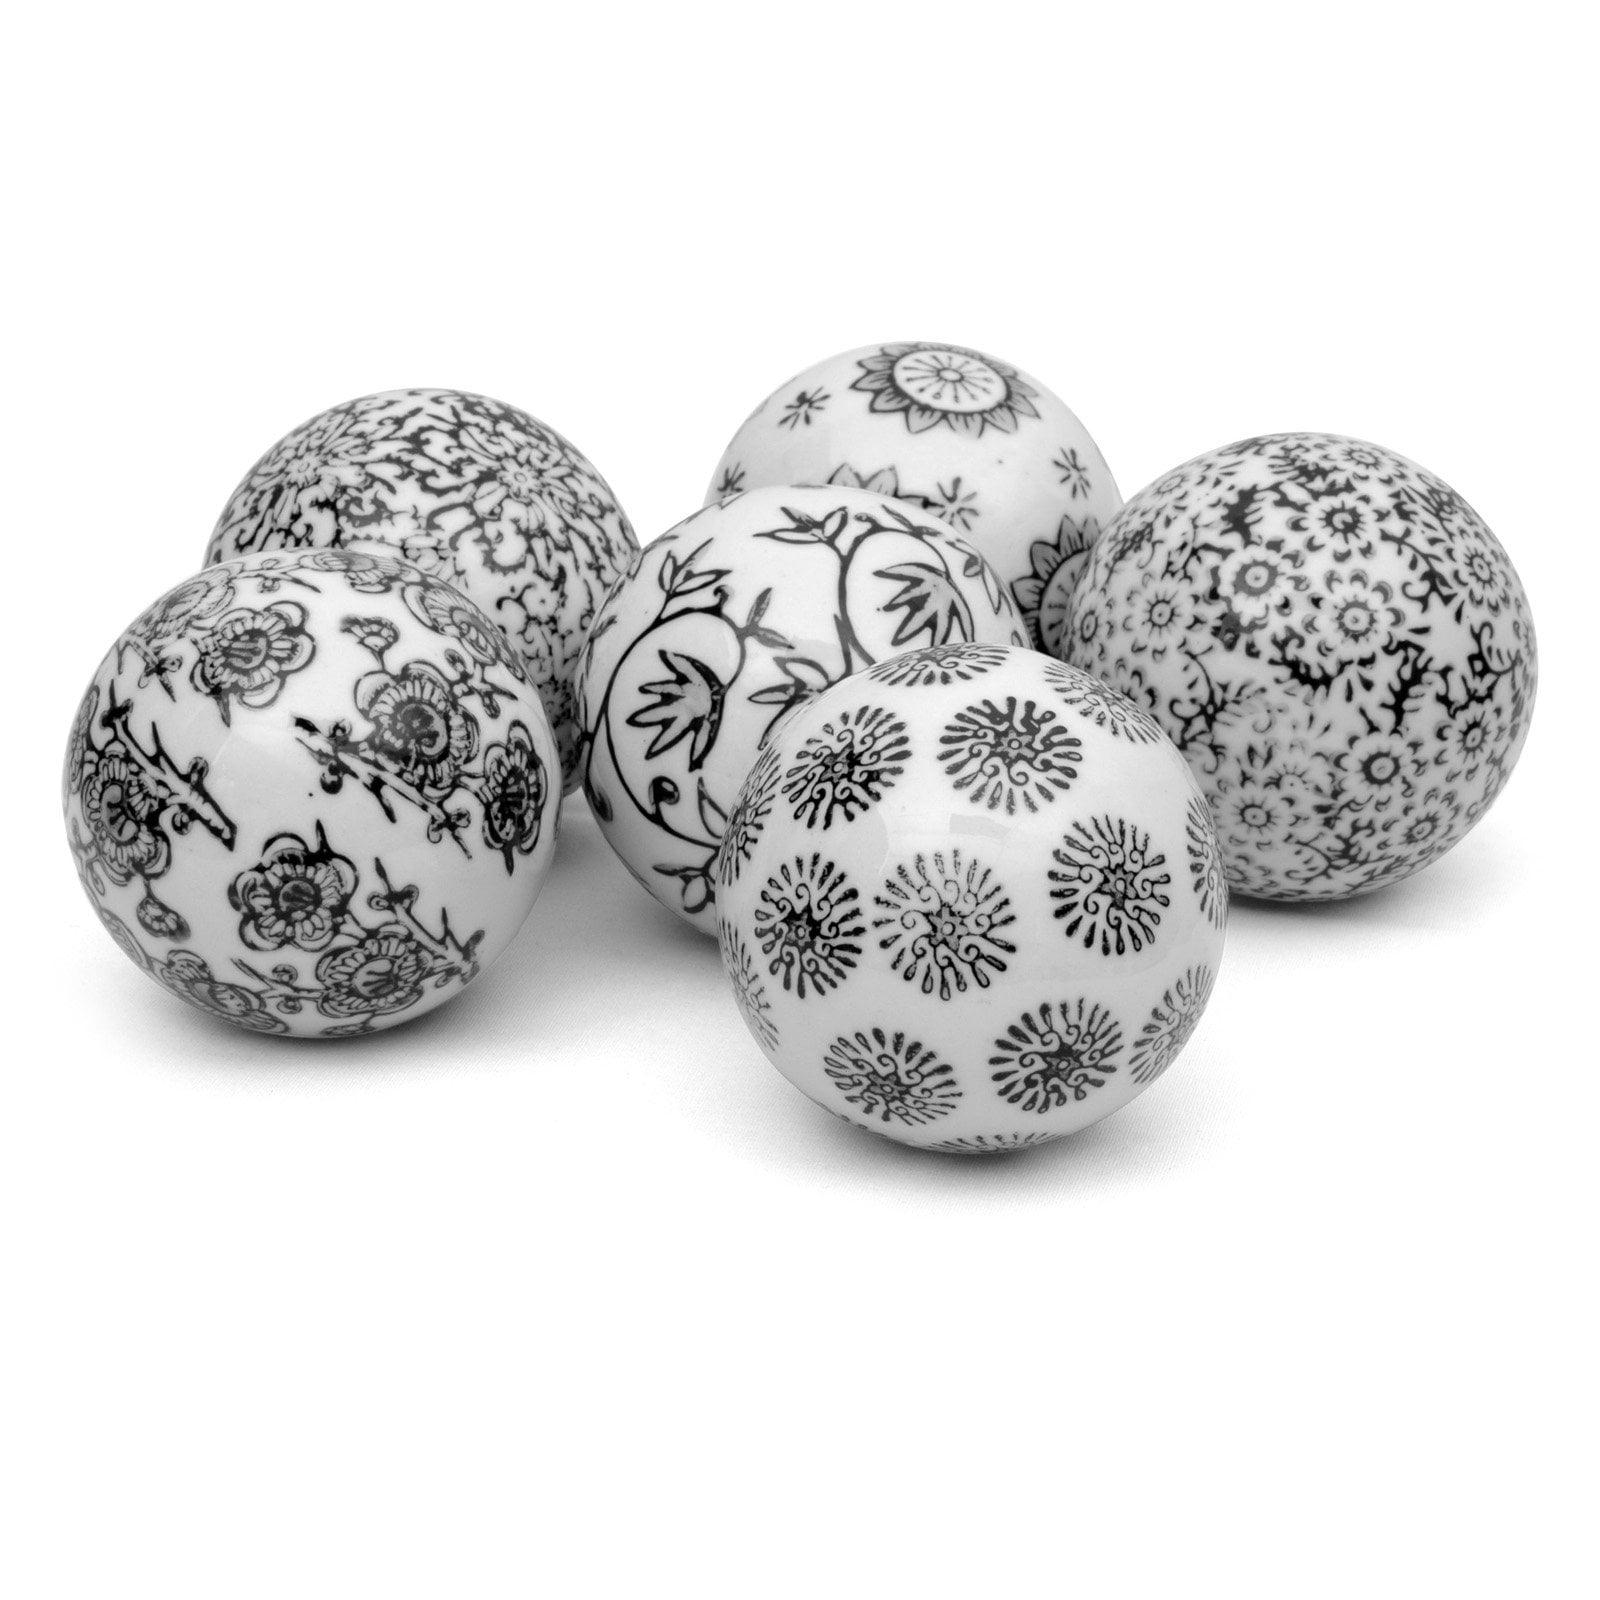 Ming Dynasty Inspired 3" Porcelain Decorative Ball Set